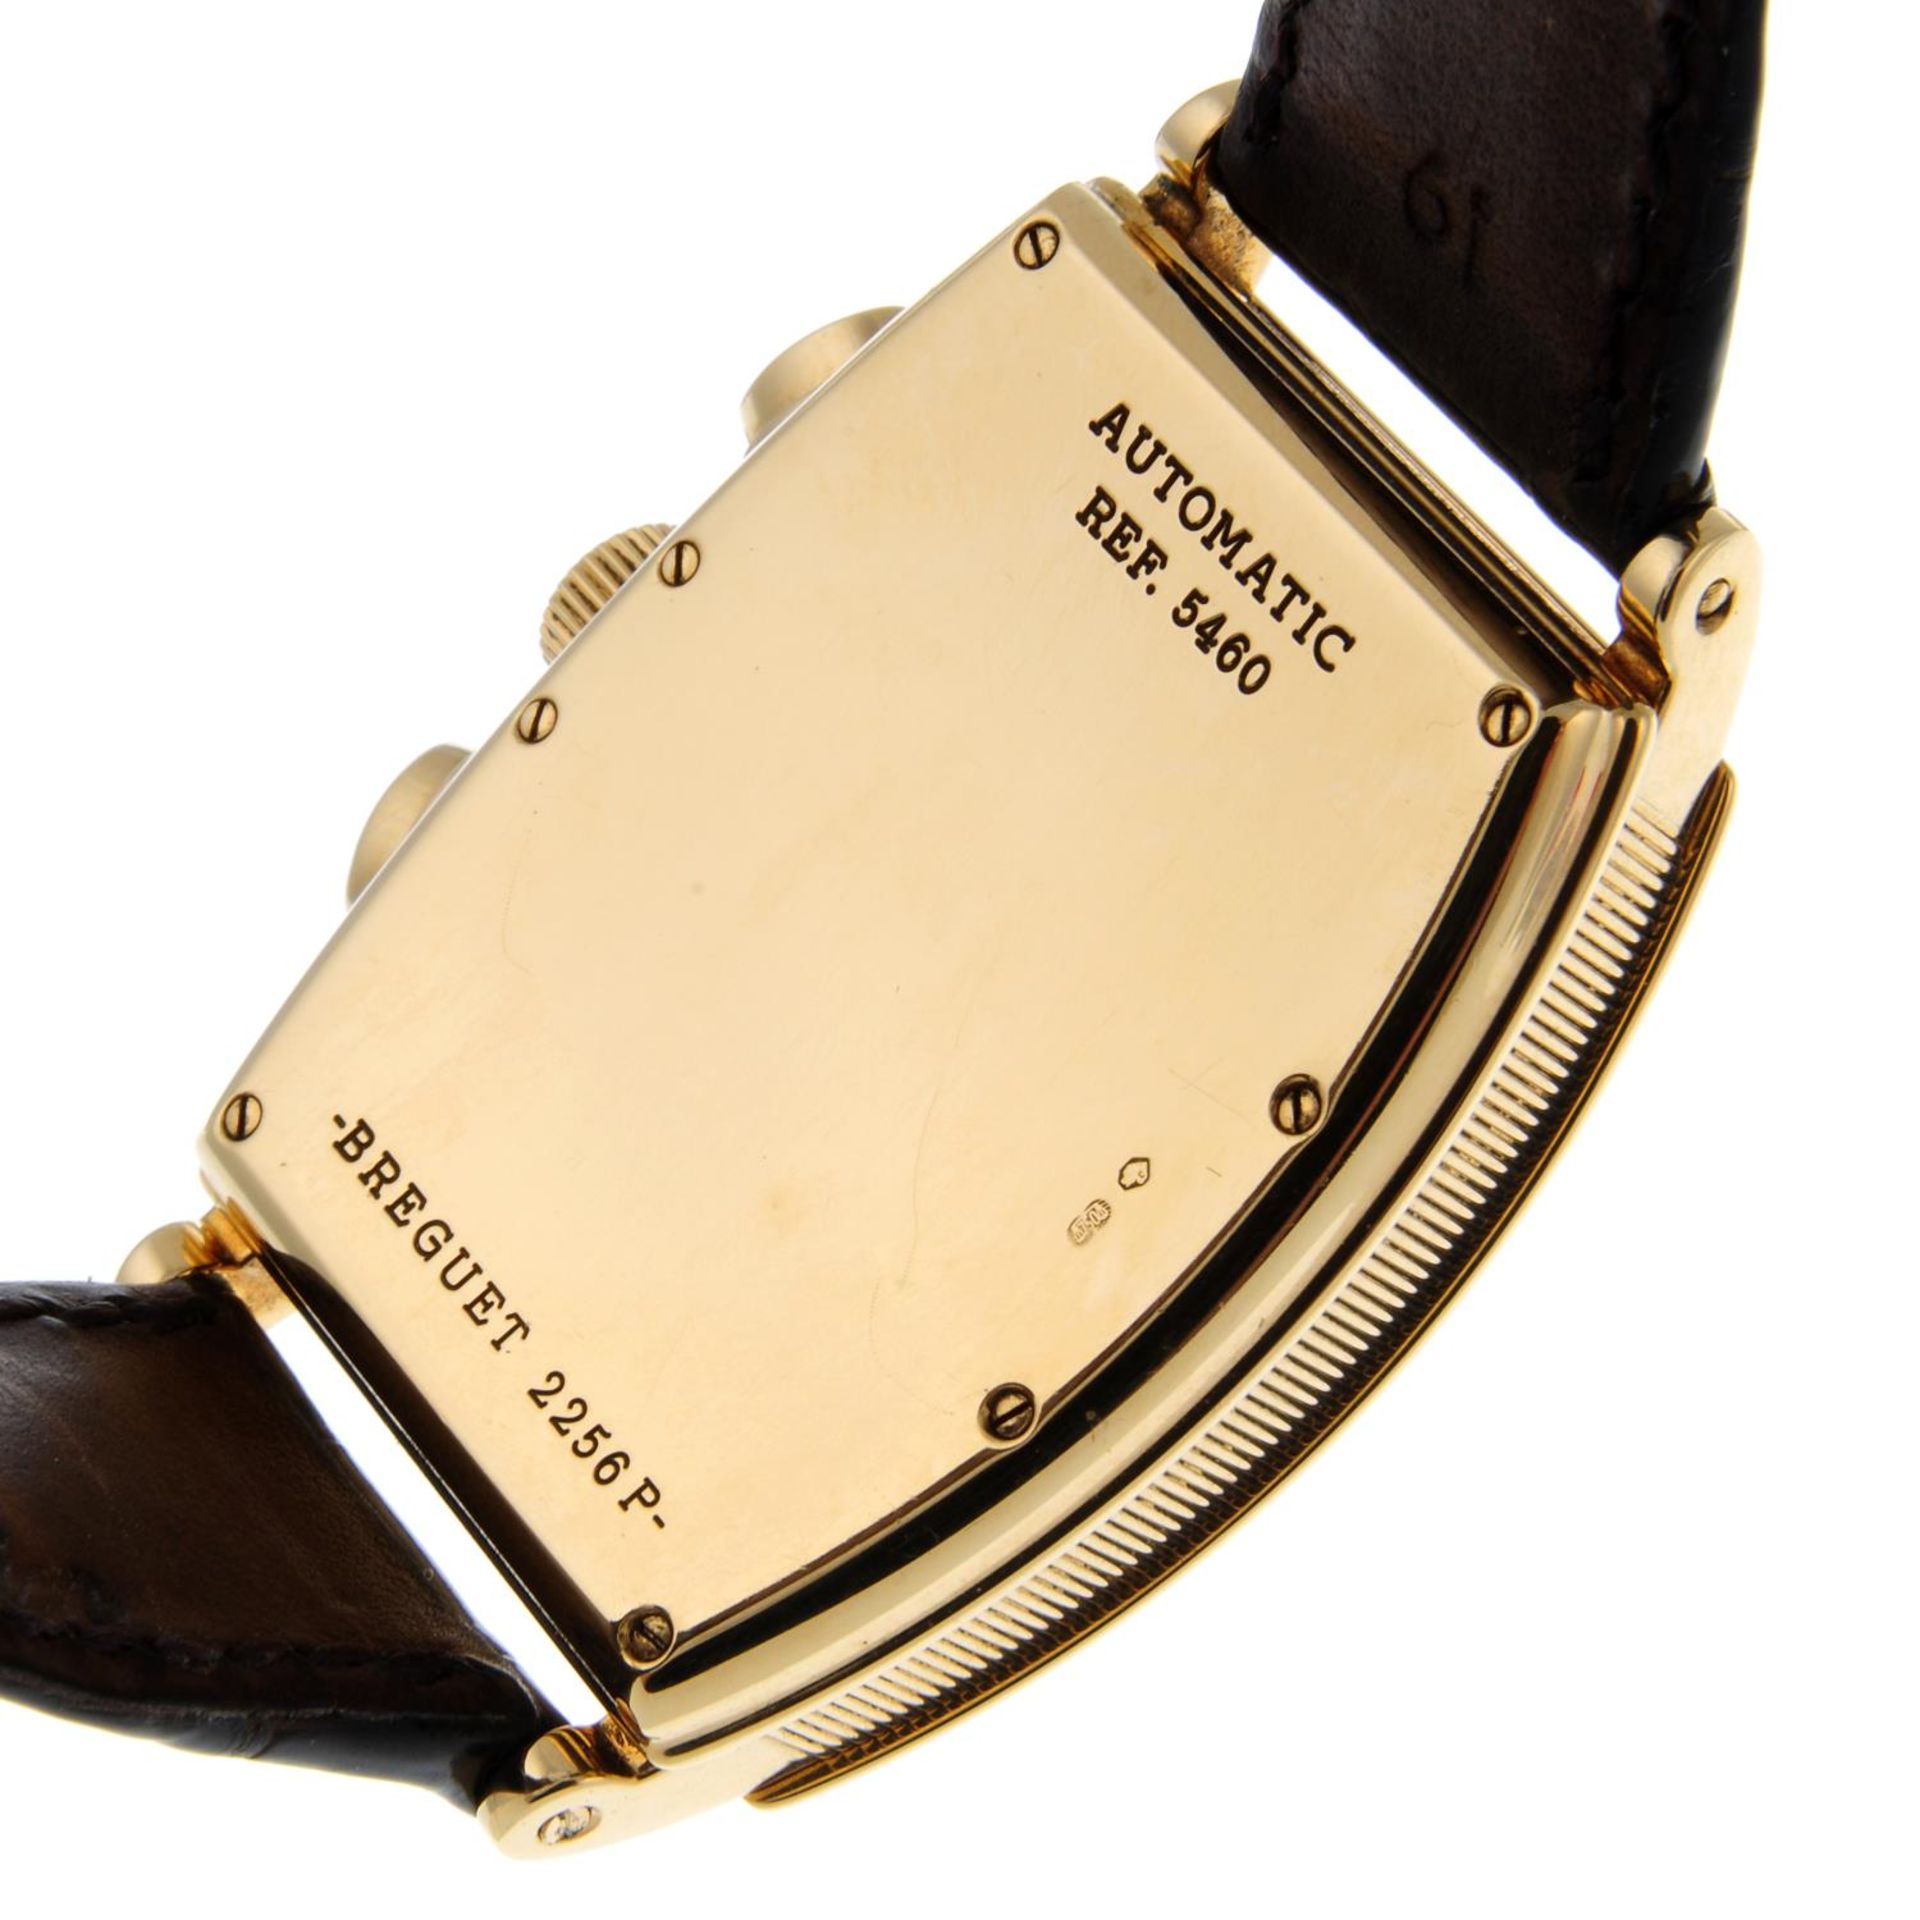 BREGUET - a gentleman's Heritage chronograph wrist watch. - Image 5 of 5